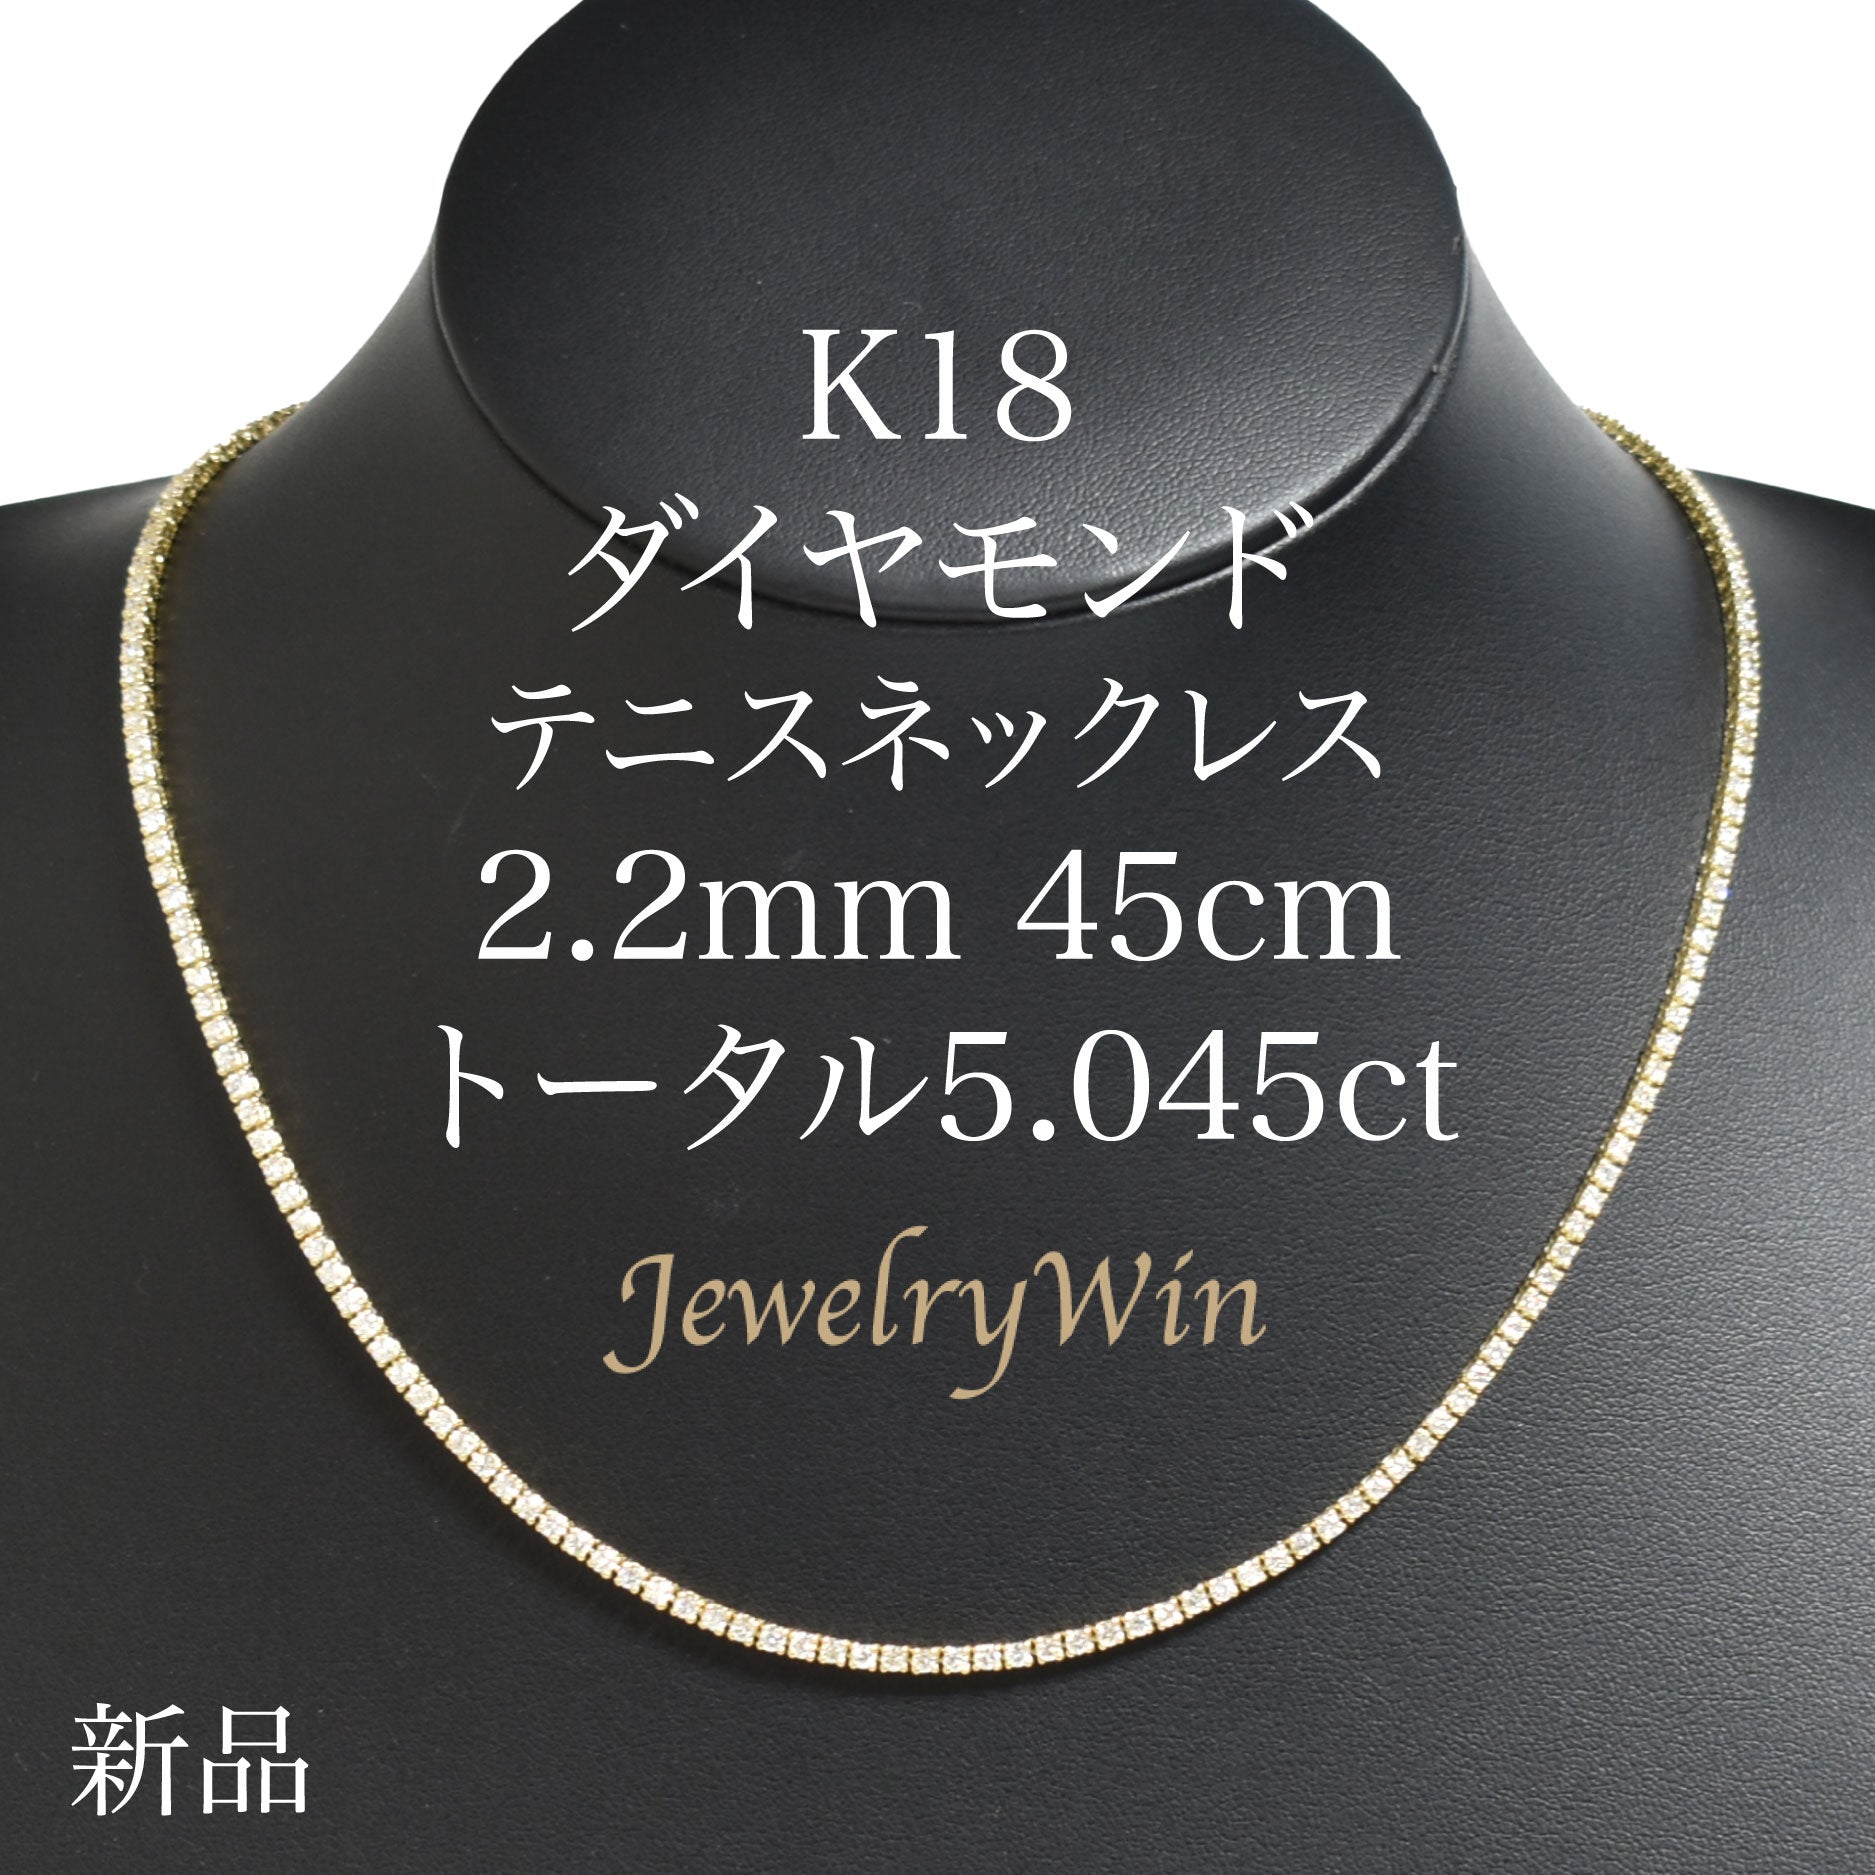 K18WG ダイヤモンド リング 0.45ct